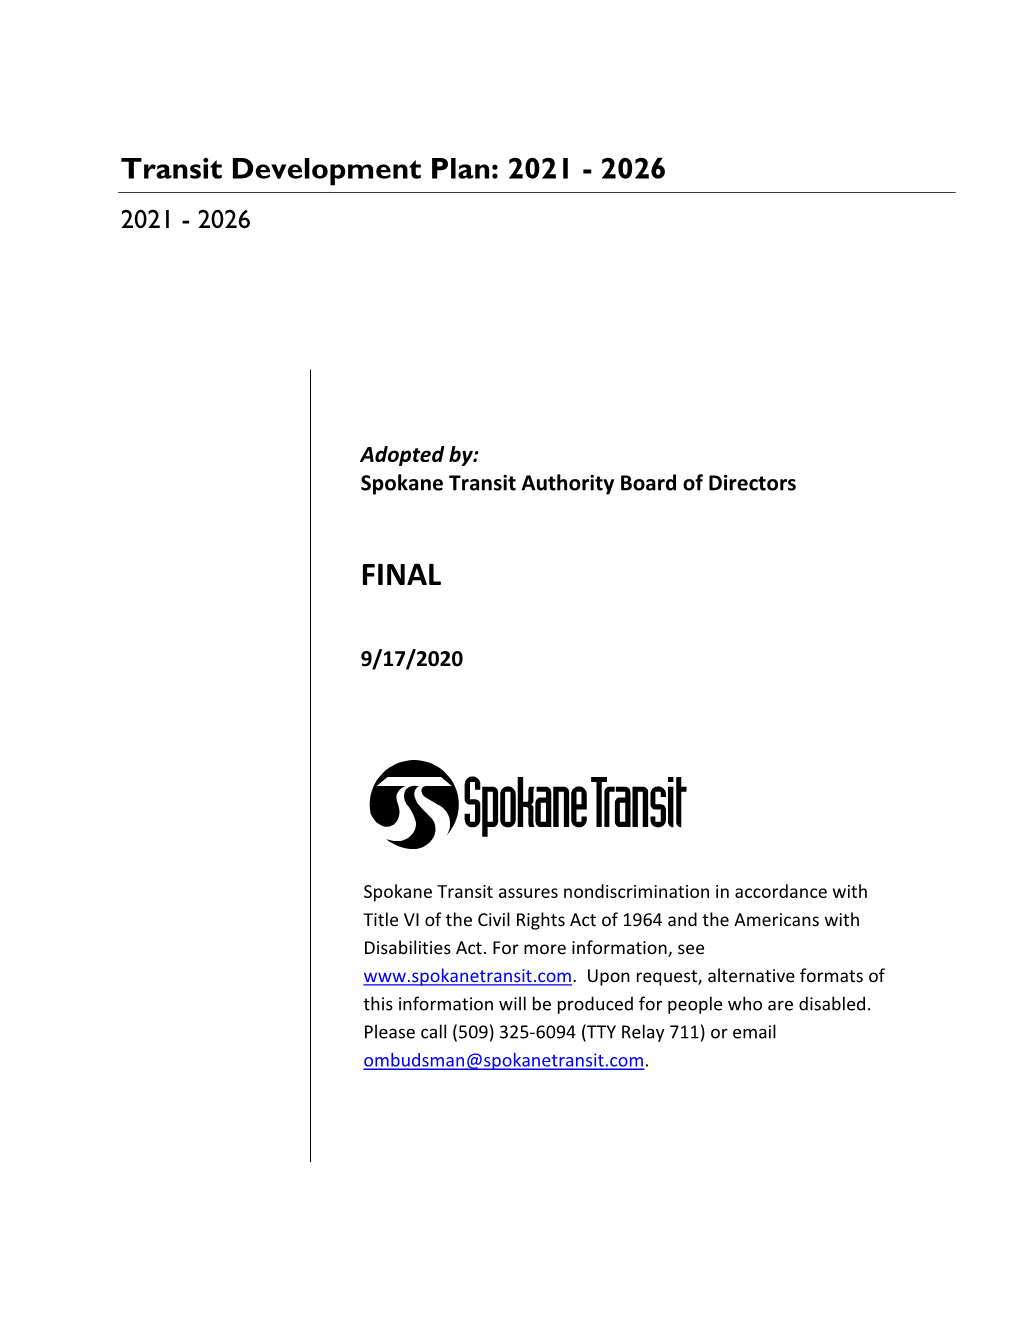 Transit Development Plan: 2021 - 2026 2021 - 2026